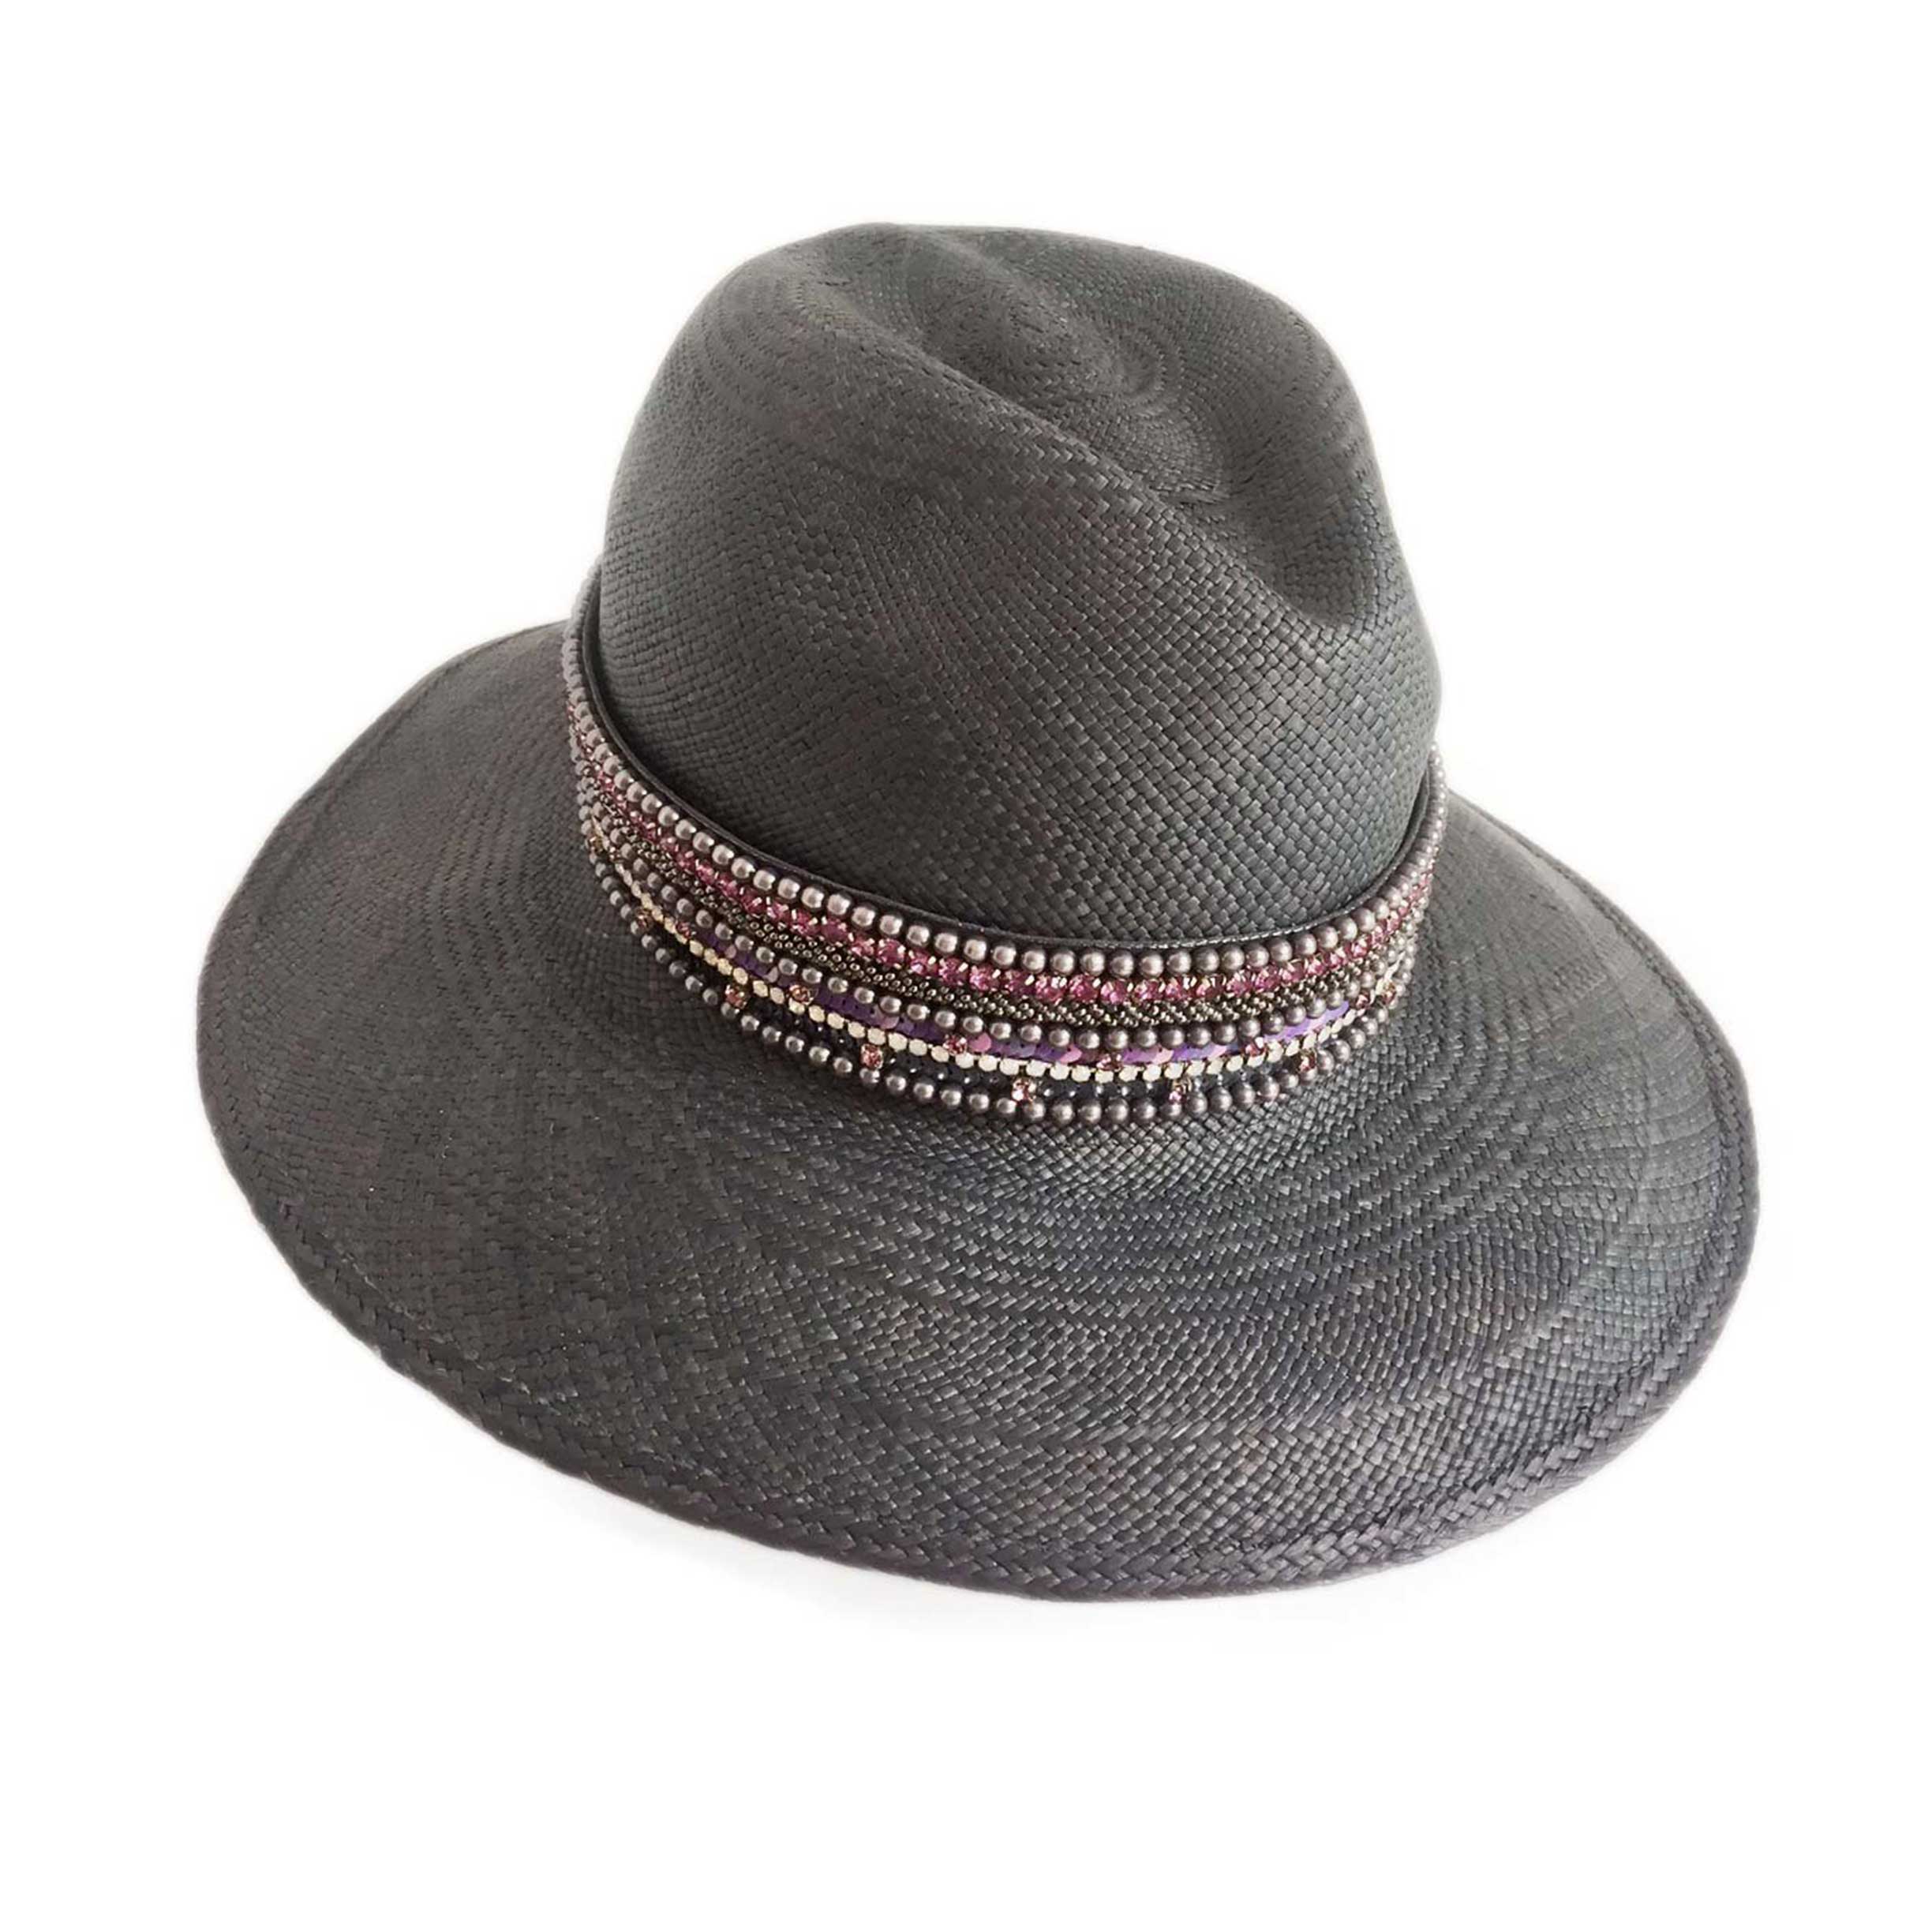 The Anacapri Beaded Pearl Panama Hat